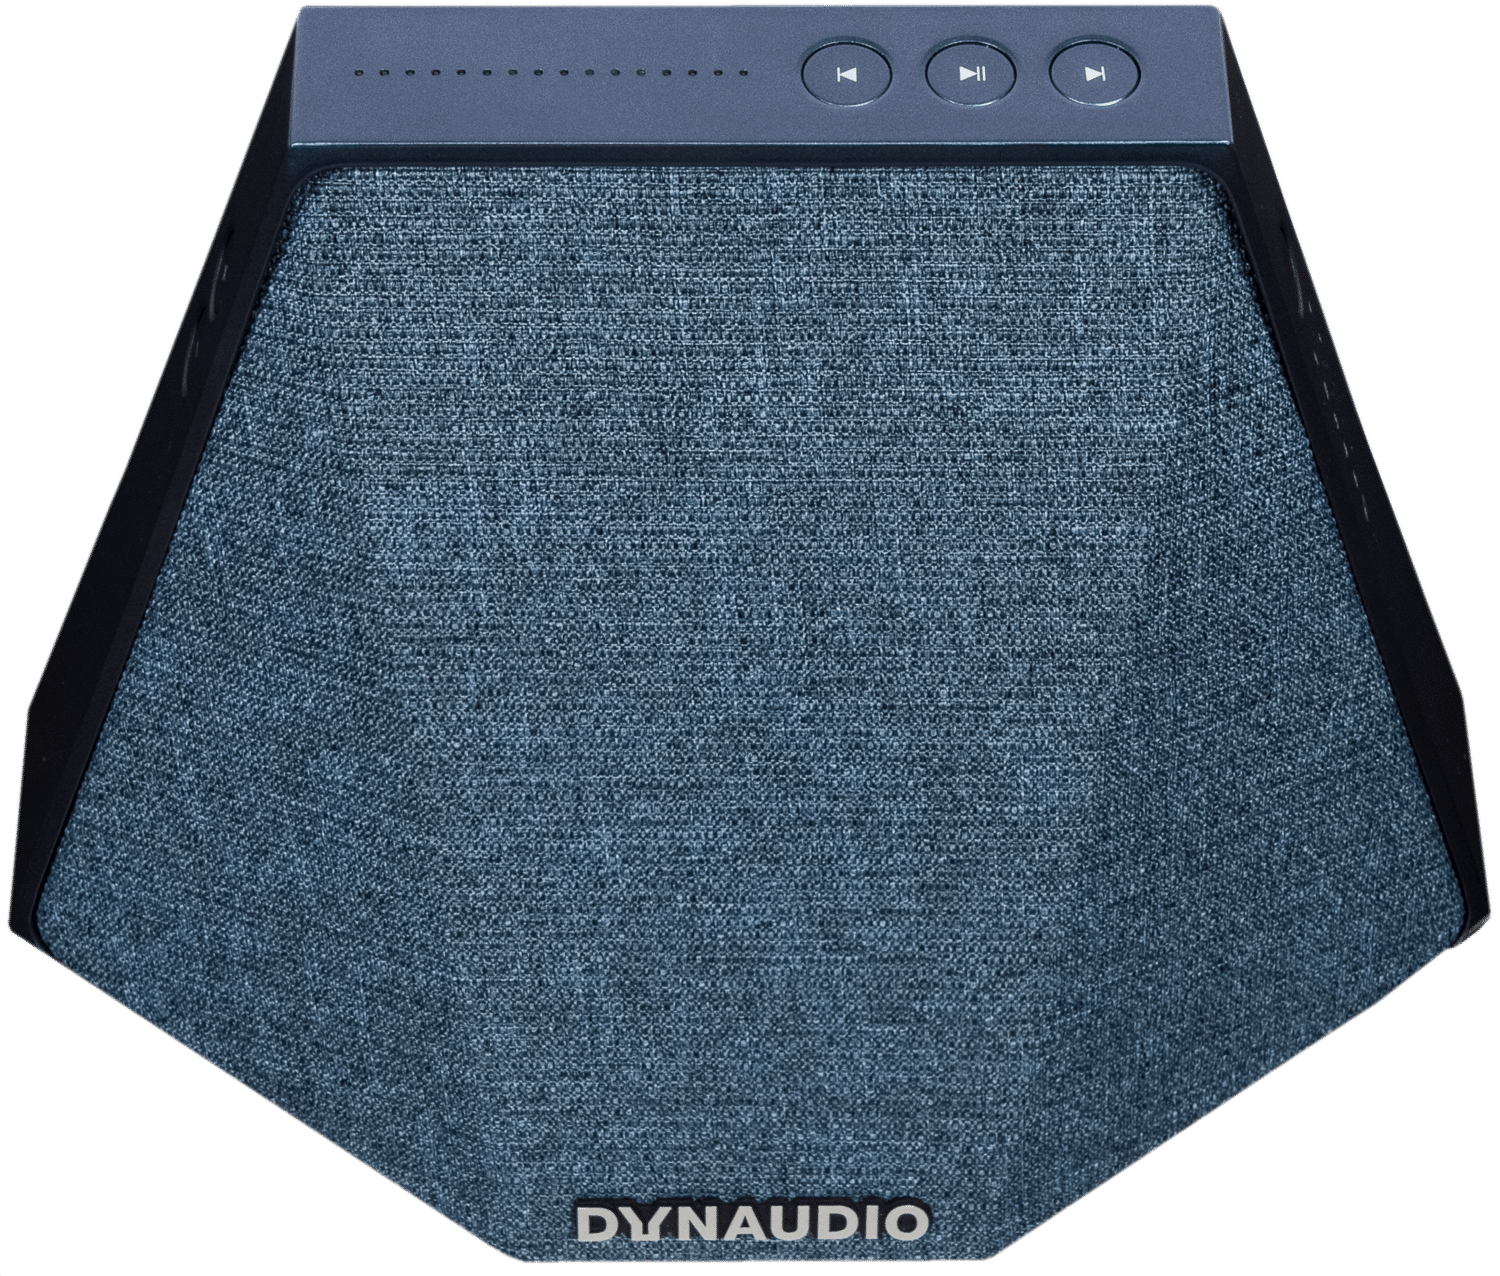 Music Wireless Speakers From Dynaudio